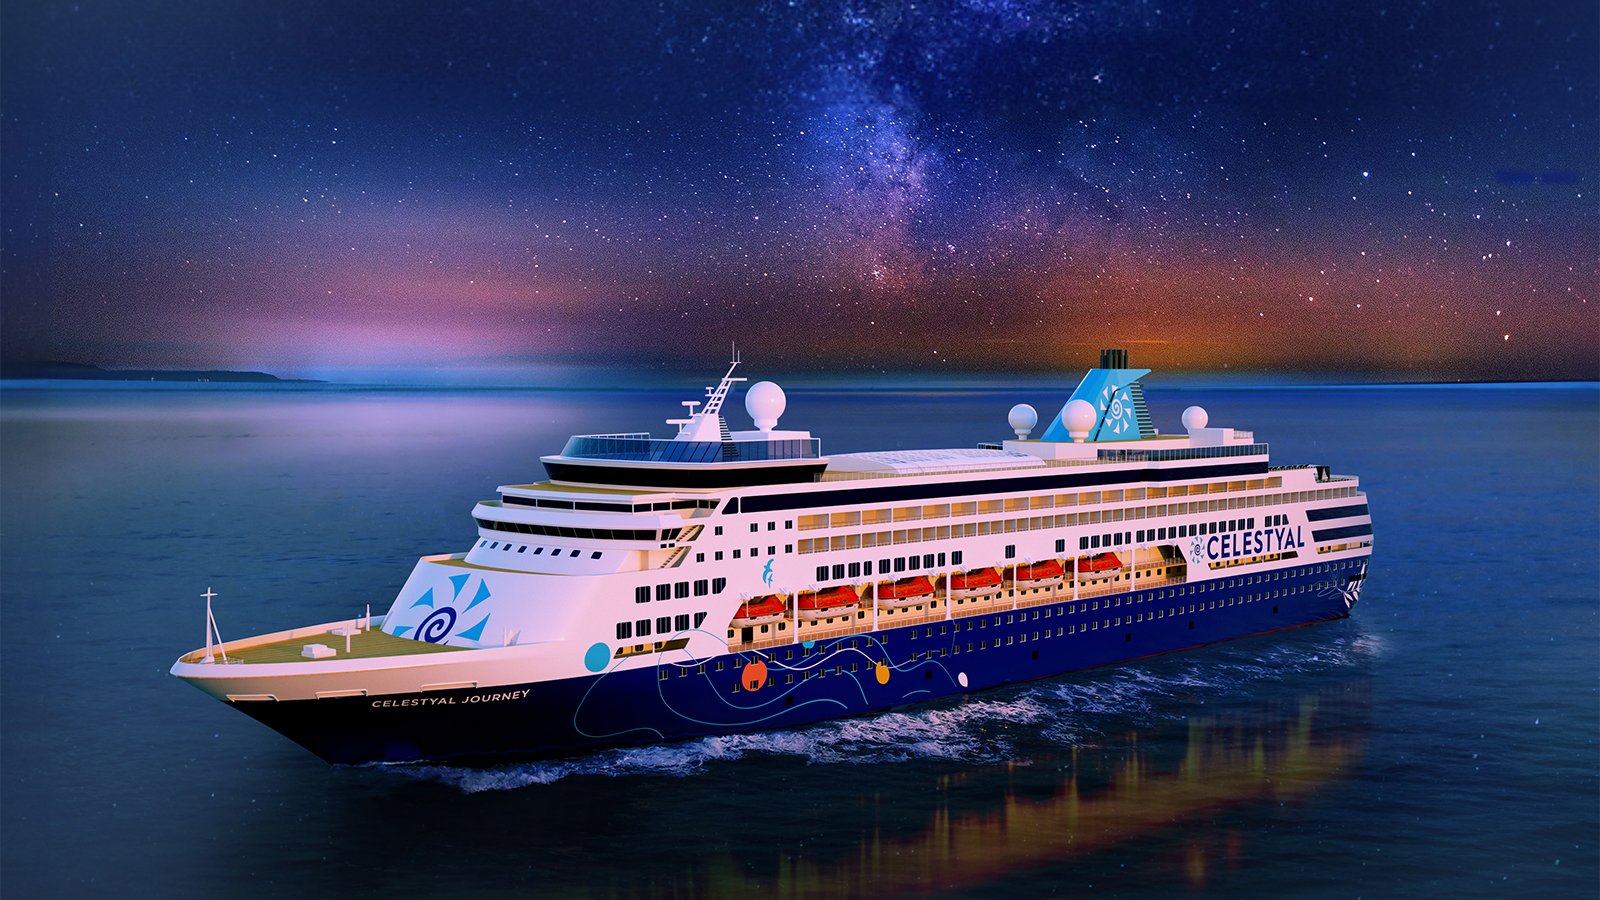 Celestyal JourneyCelestyal Cruises